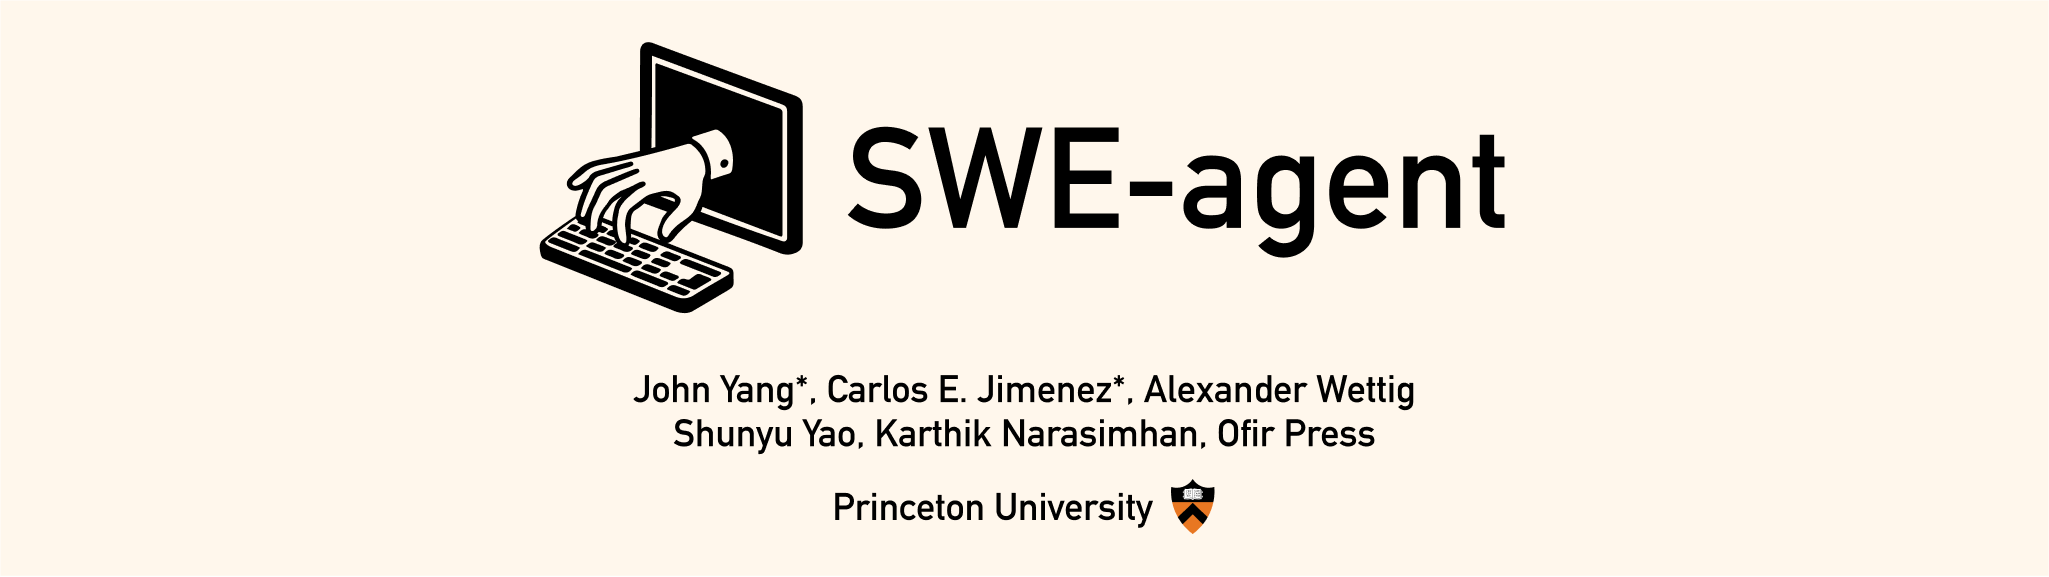 swe-agent.com